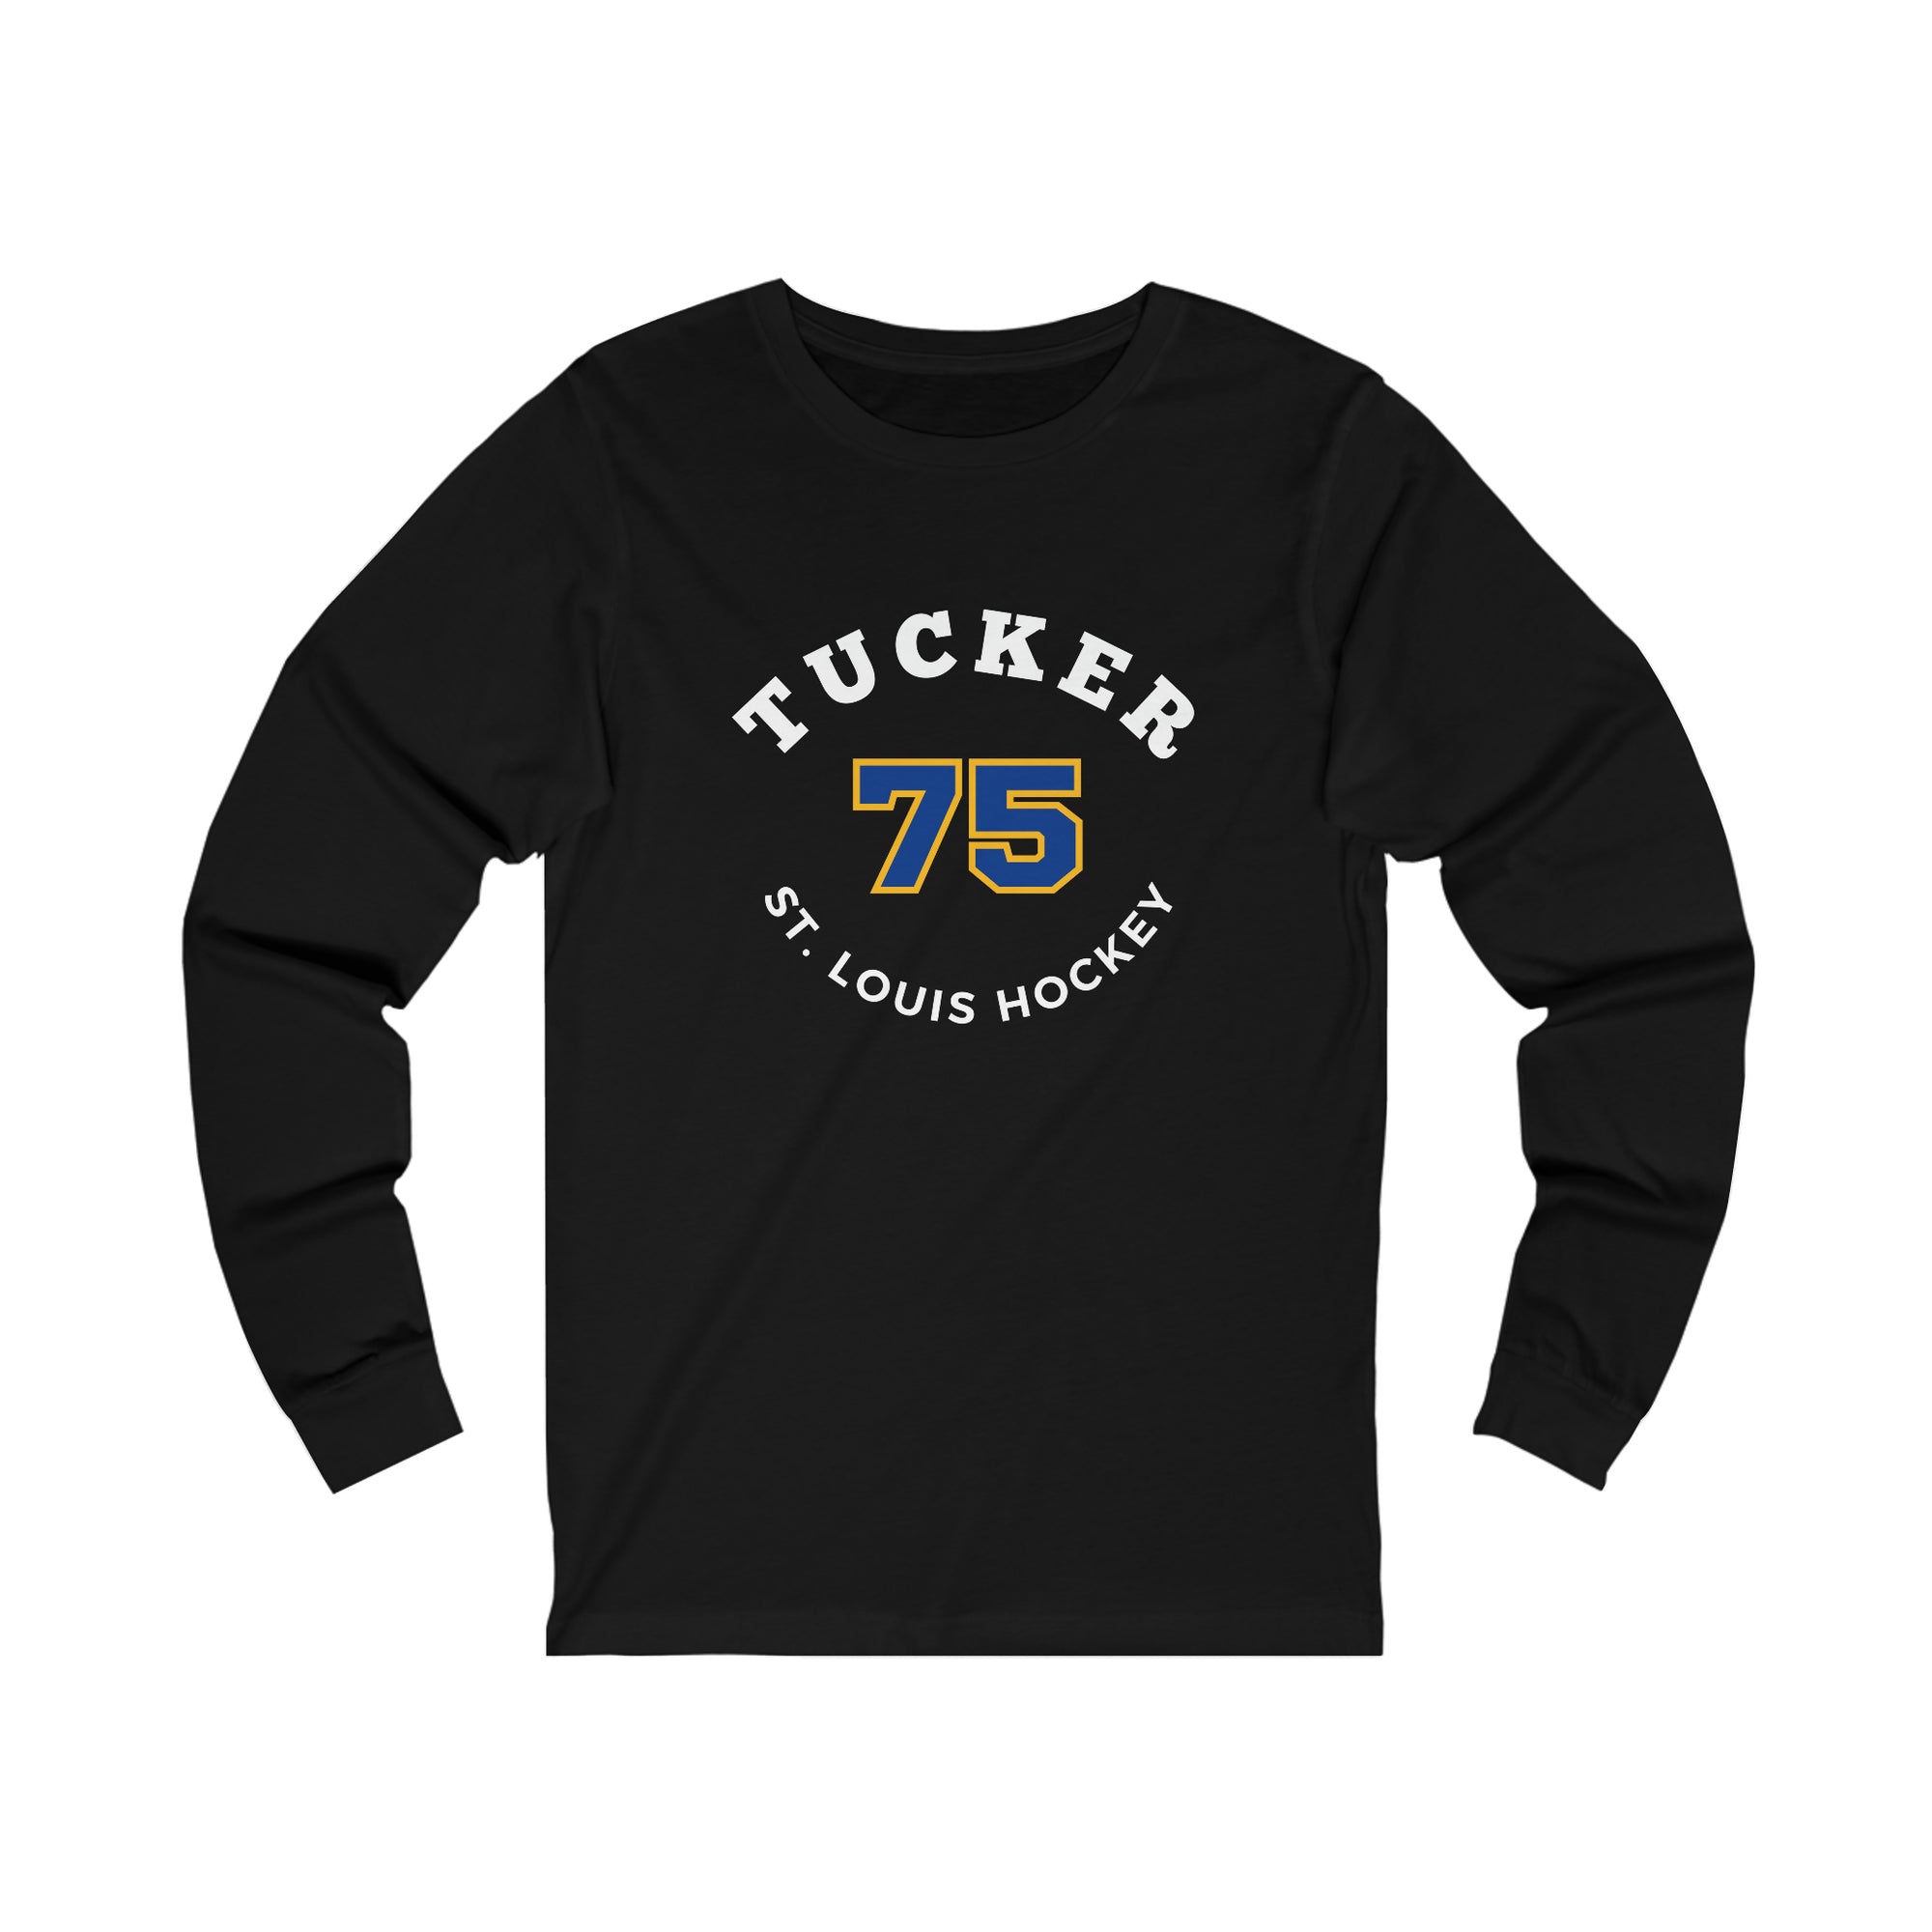 Tucker 75 St. Louis Hockey Number Arch Design Unisex Jersey Long Sleeve Shirt